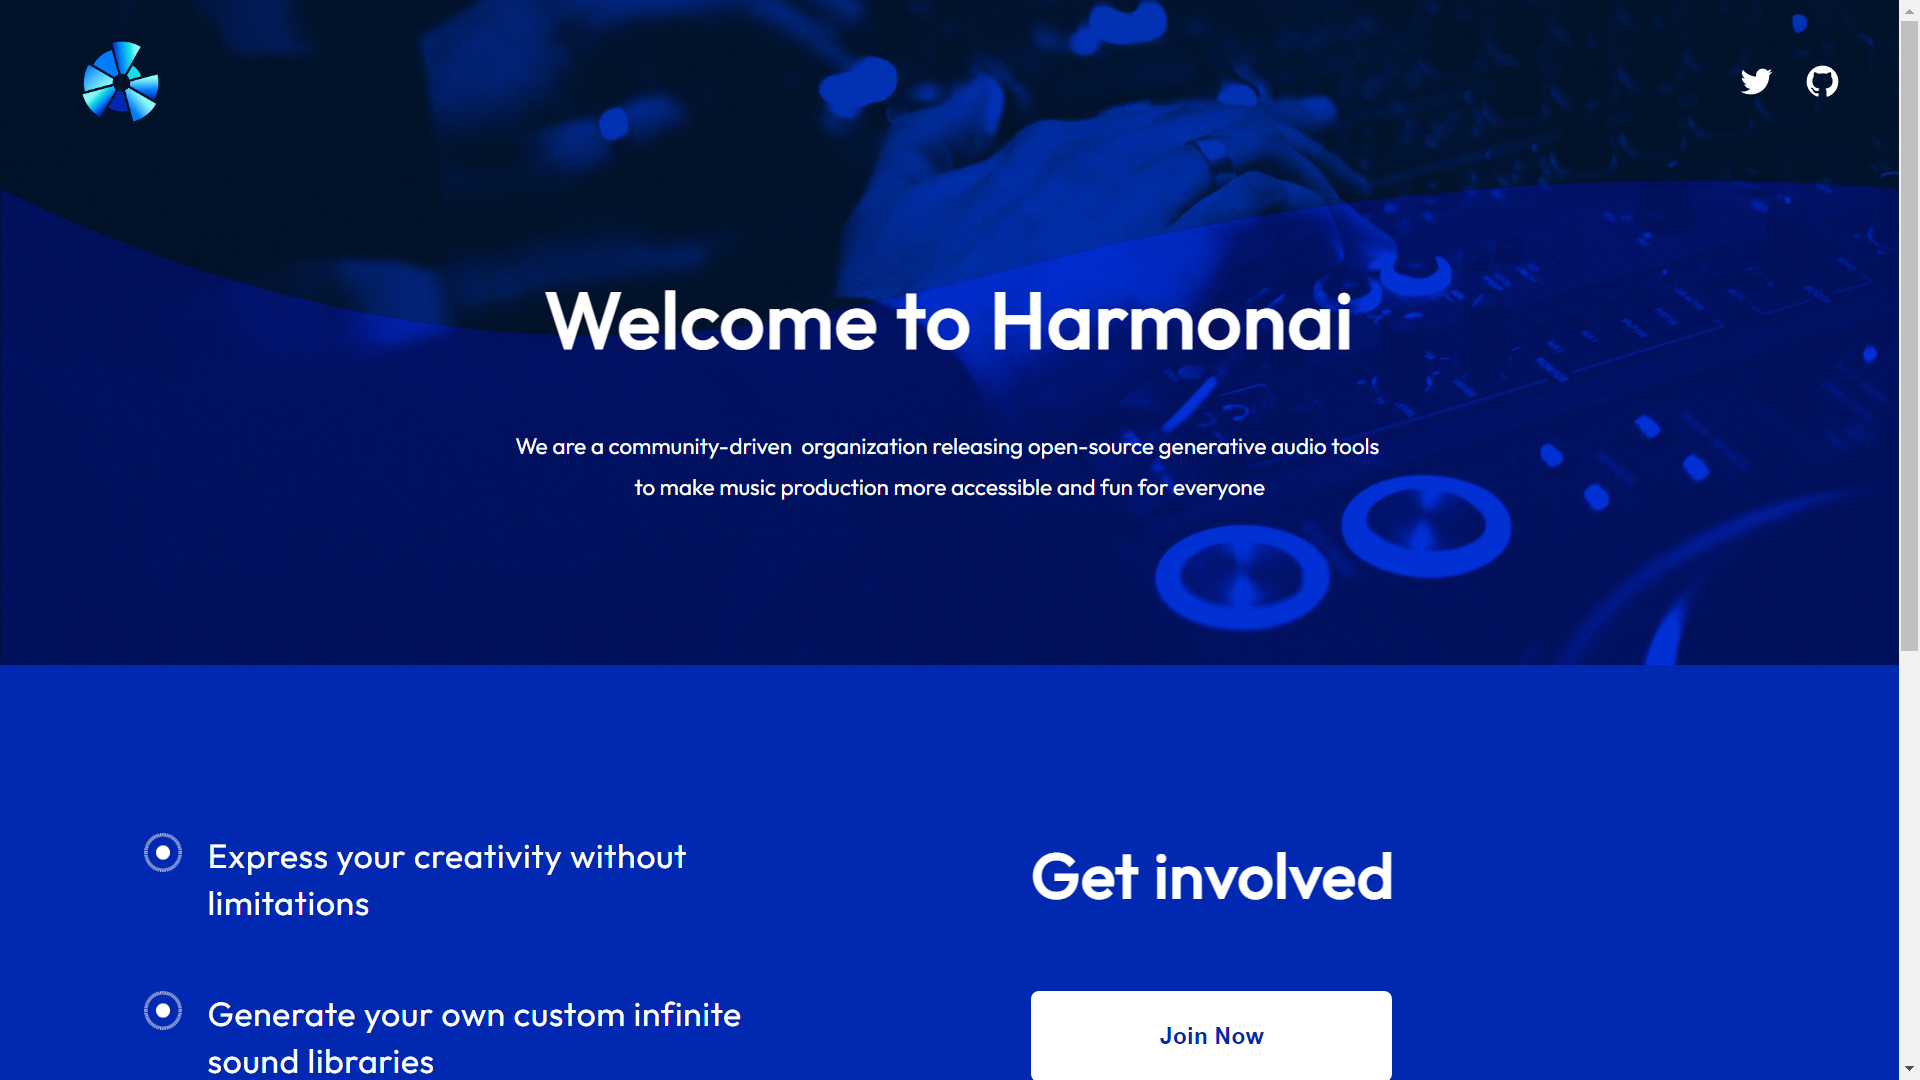 Harmonai - Community-driven org releasing open-source audio tools.